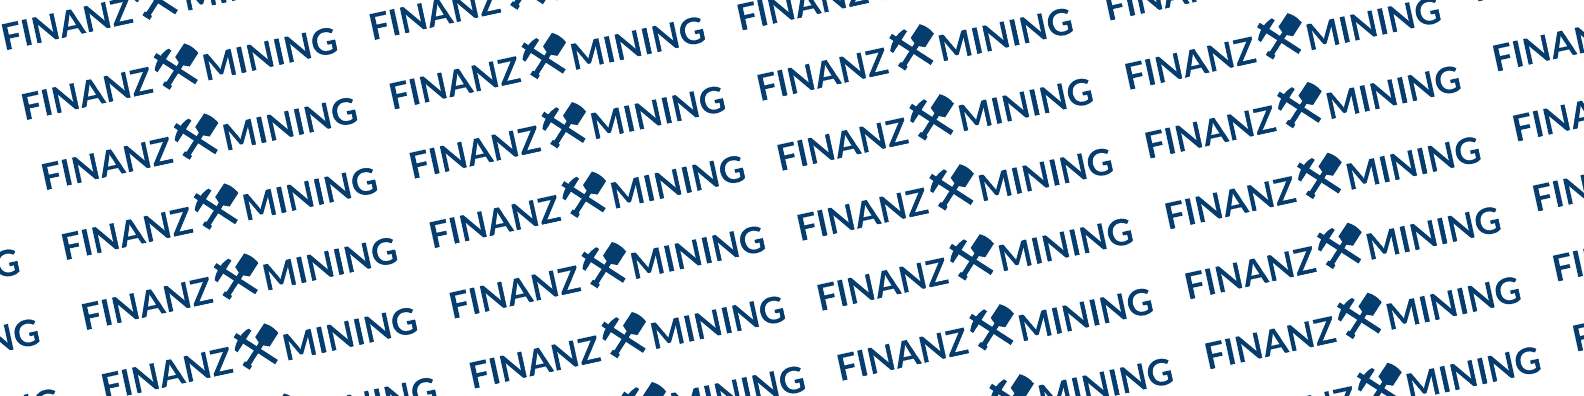 Finanzmining / startup from Berlin / Background